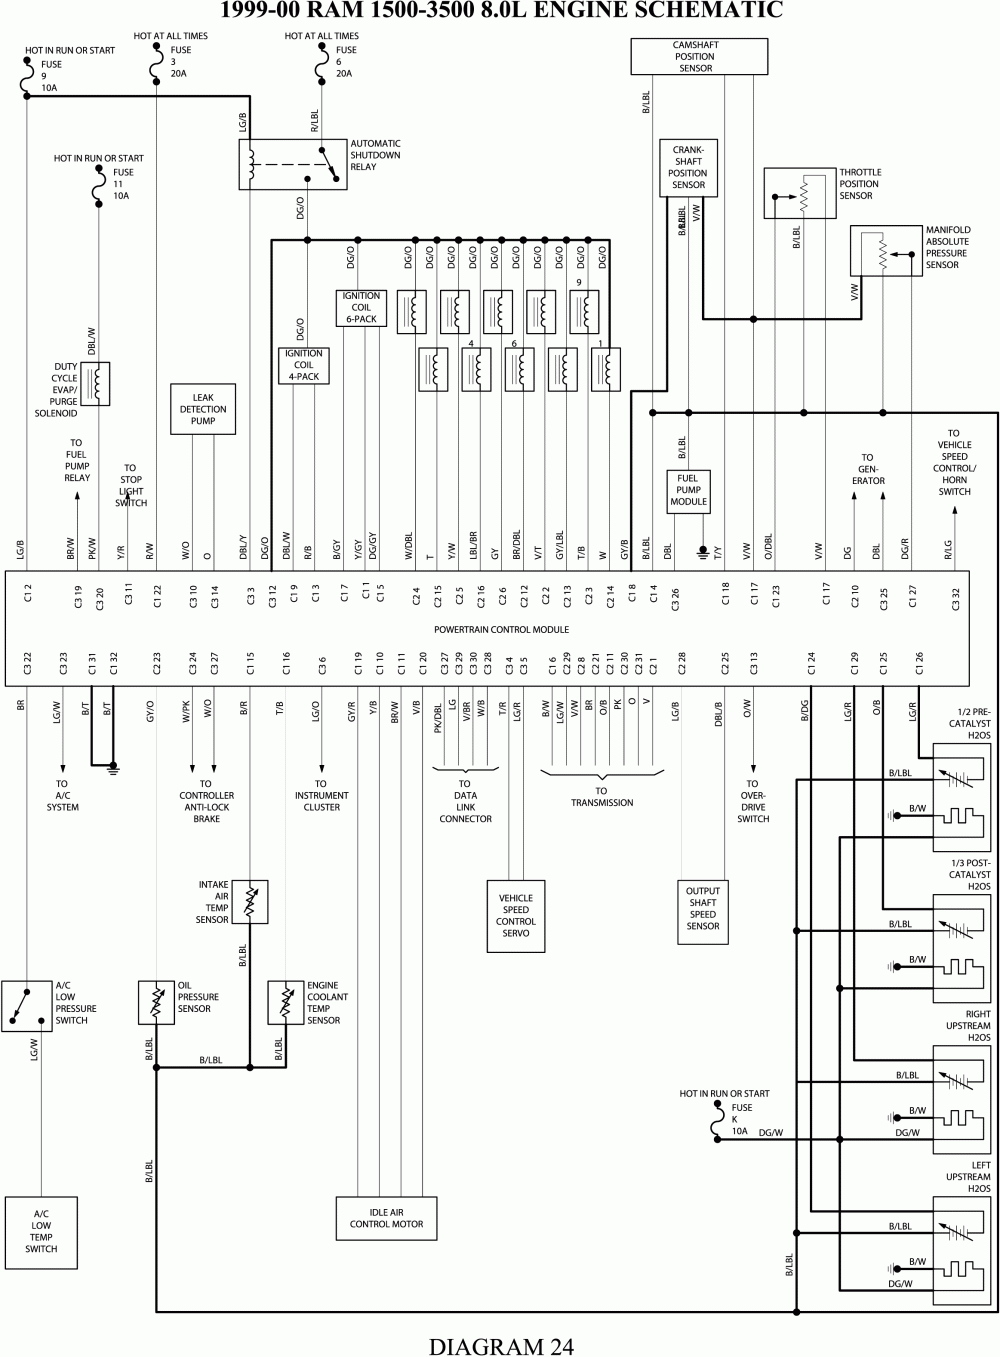 Repair Guides | Wiring Diagrams | Wiring Diagrams | Autozone - Dodge Ram 1500 Wiring Diagram